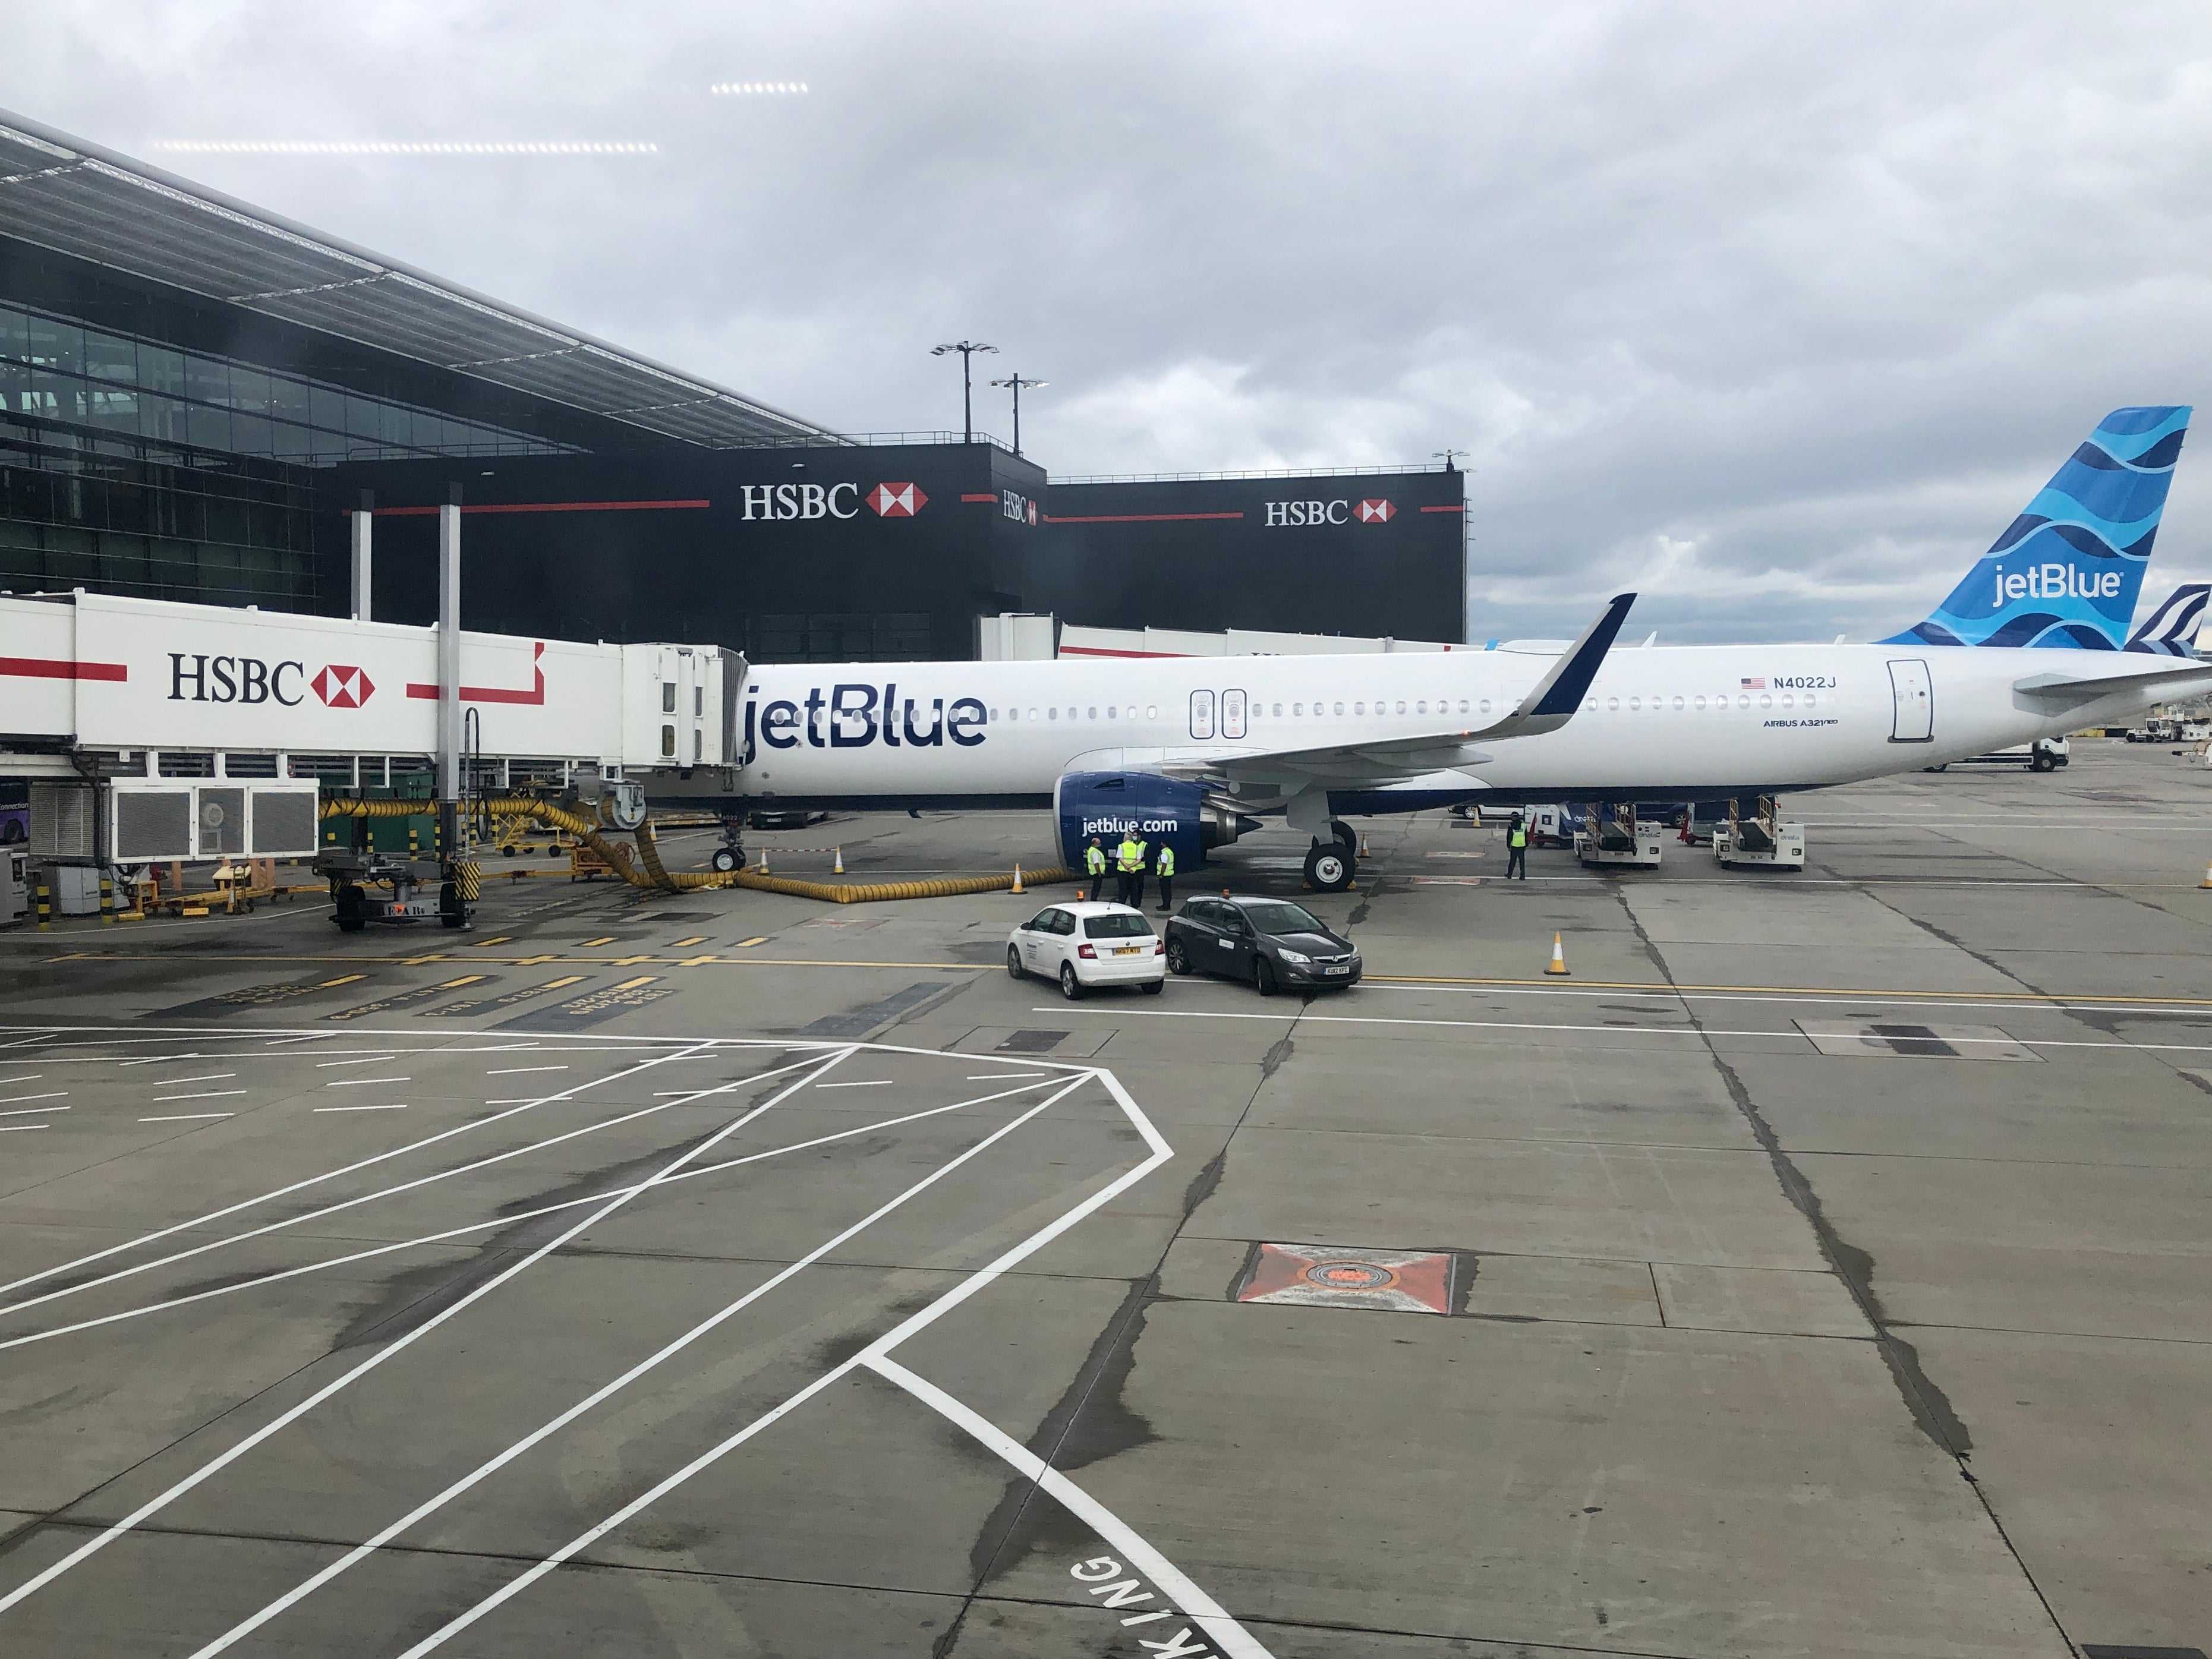 New jet: jetBlue’s Airbus waiting to depart from Heathrow to New York JFK